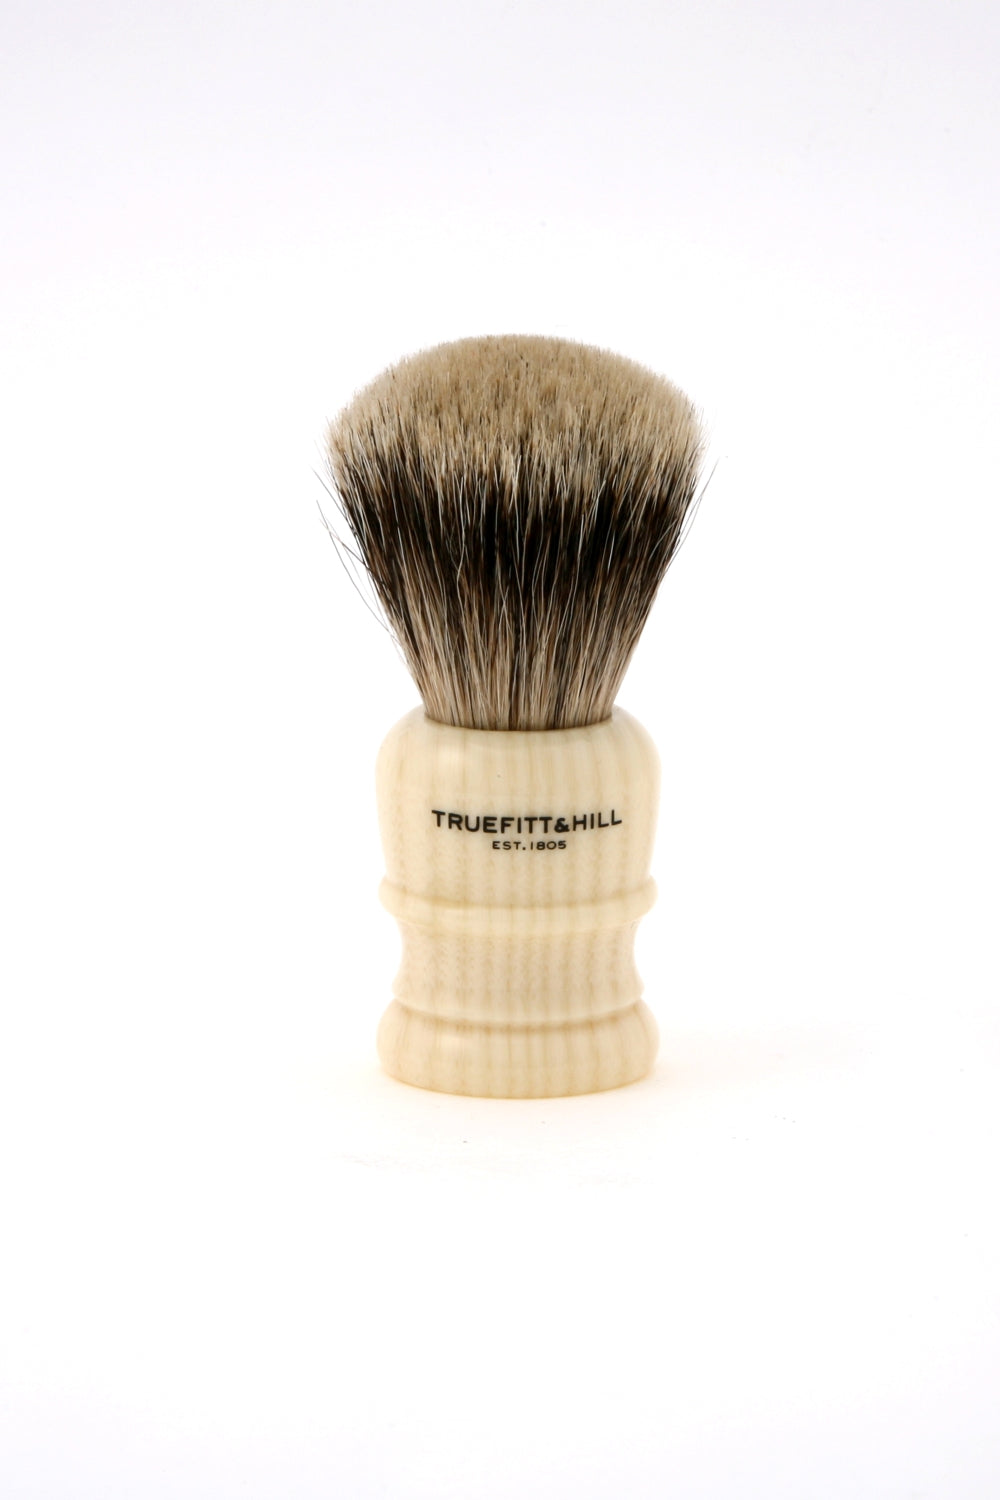 Truefitt & Hill - Wellington Badger Shaving Brush - Ivory - Regent Tailoring